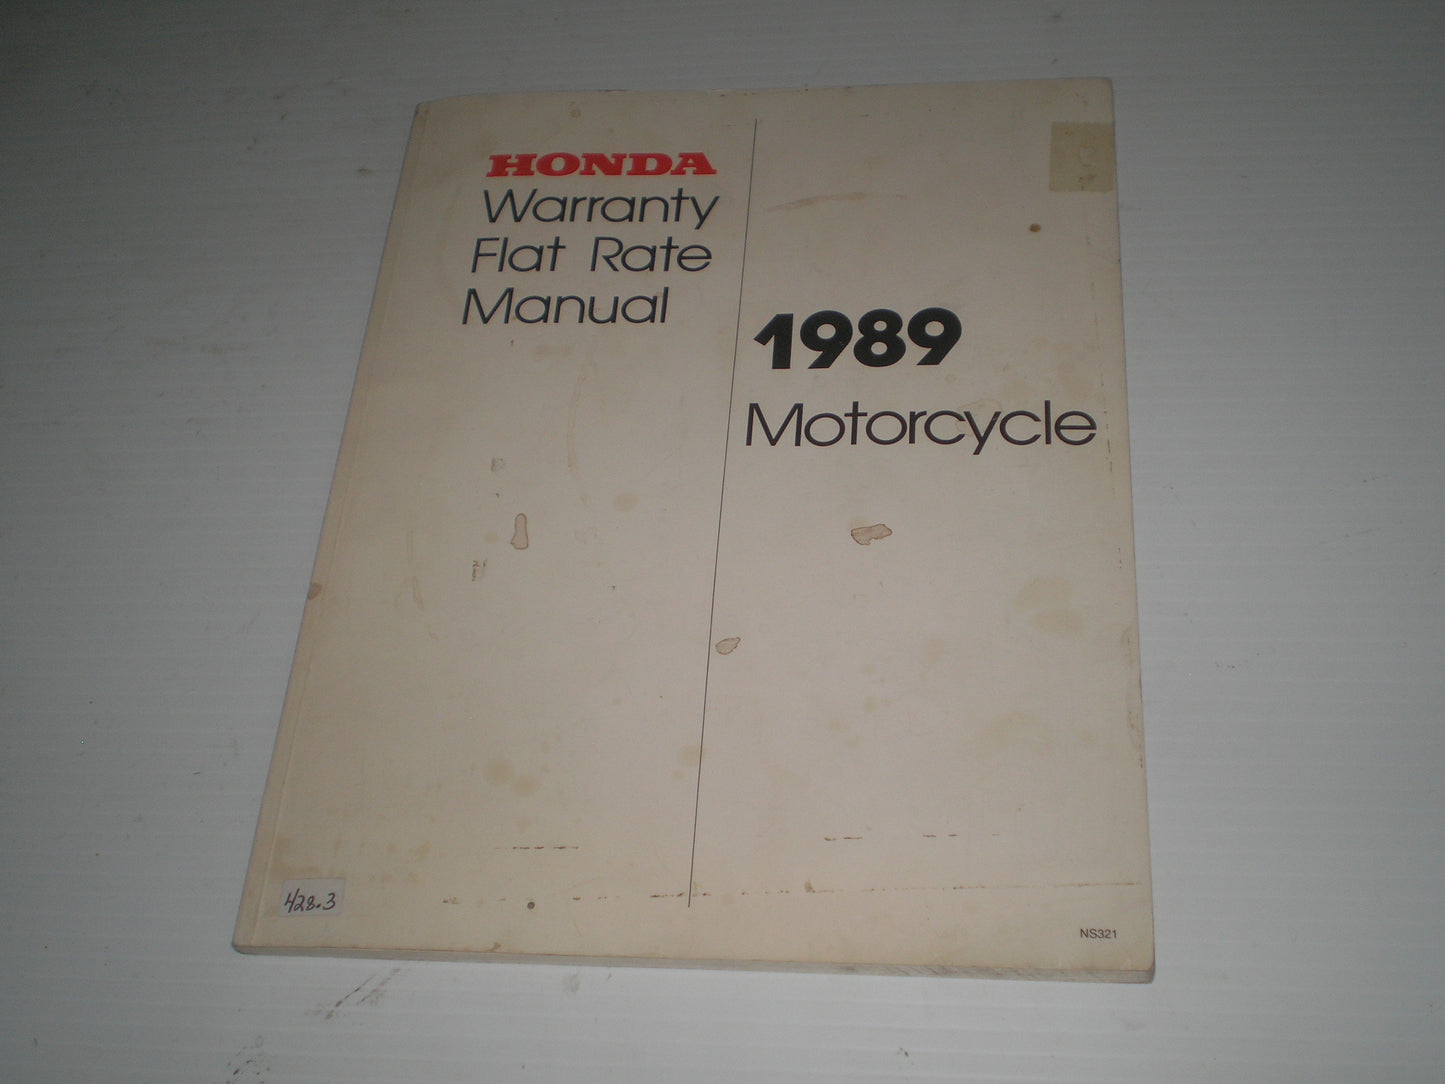 HONDA 1989 Motorcycle  Warranty Flat Rate Manual  NS321  #428.3